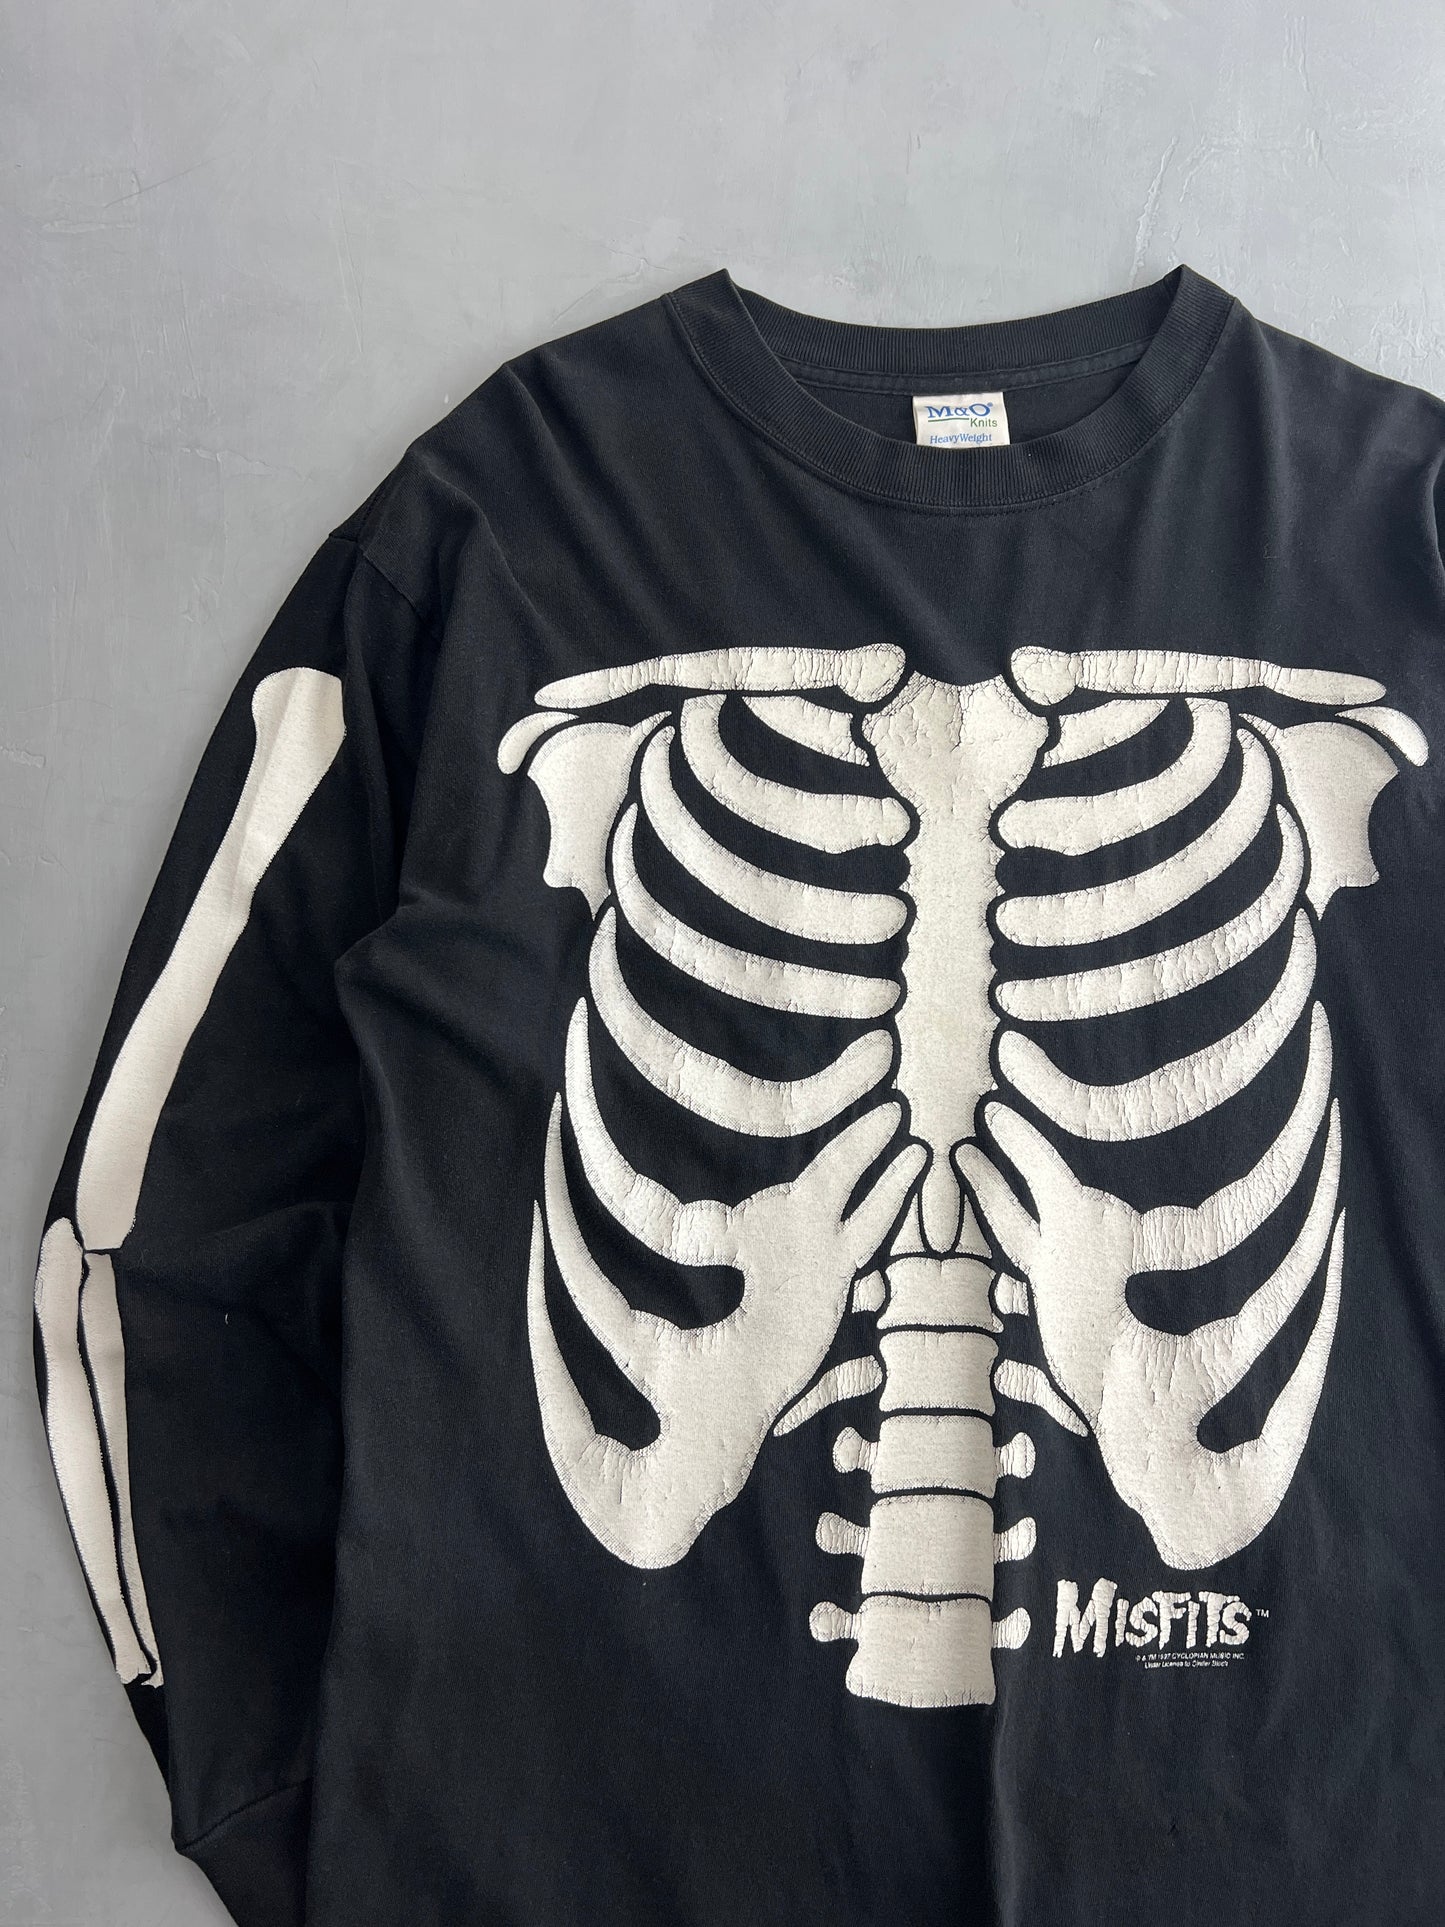 '97 Misfits Skeleton Long Sleeve Tee [L]